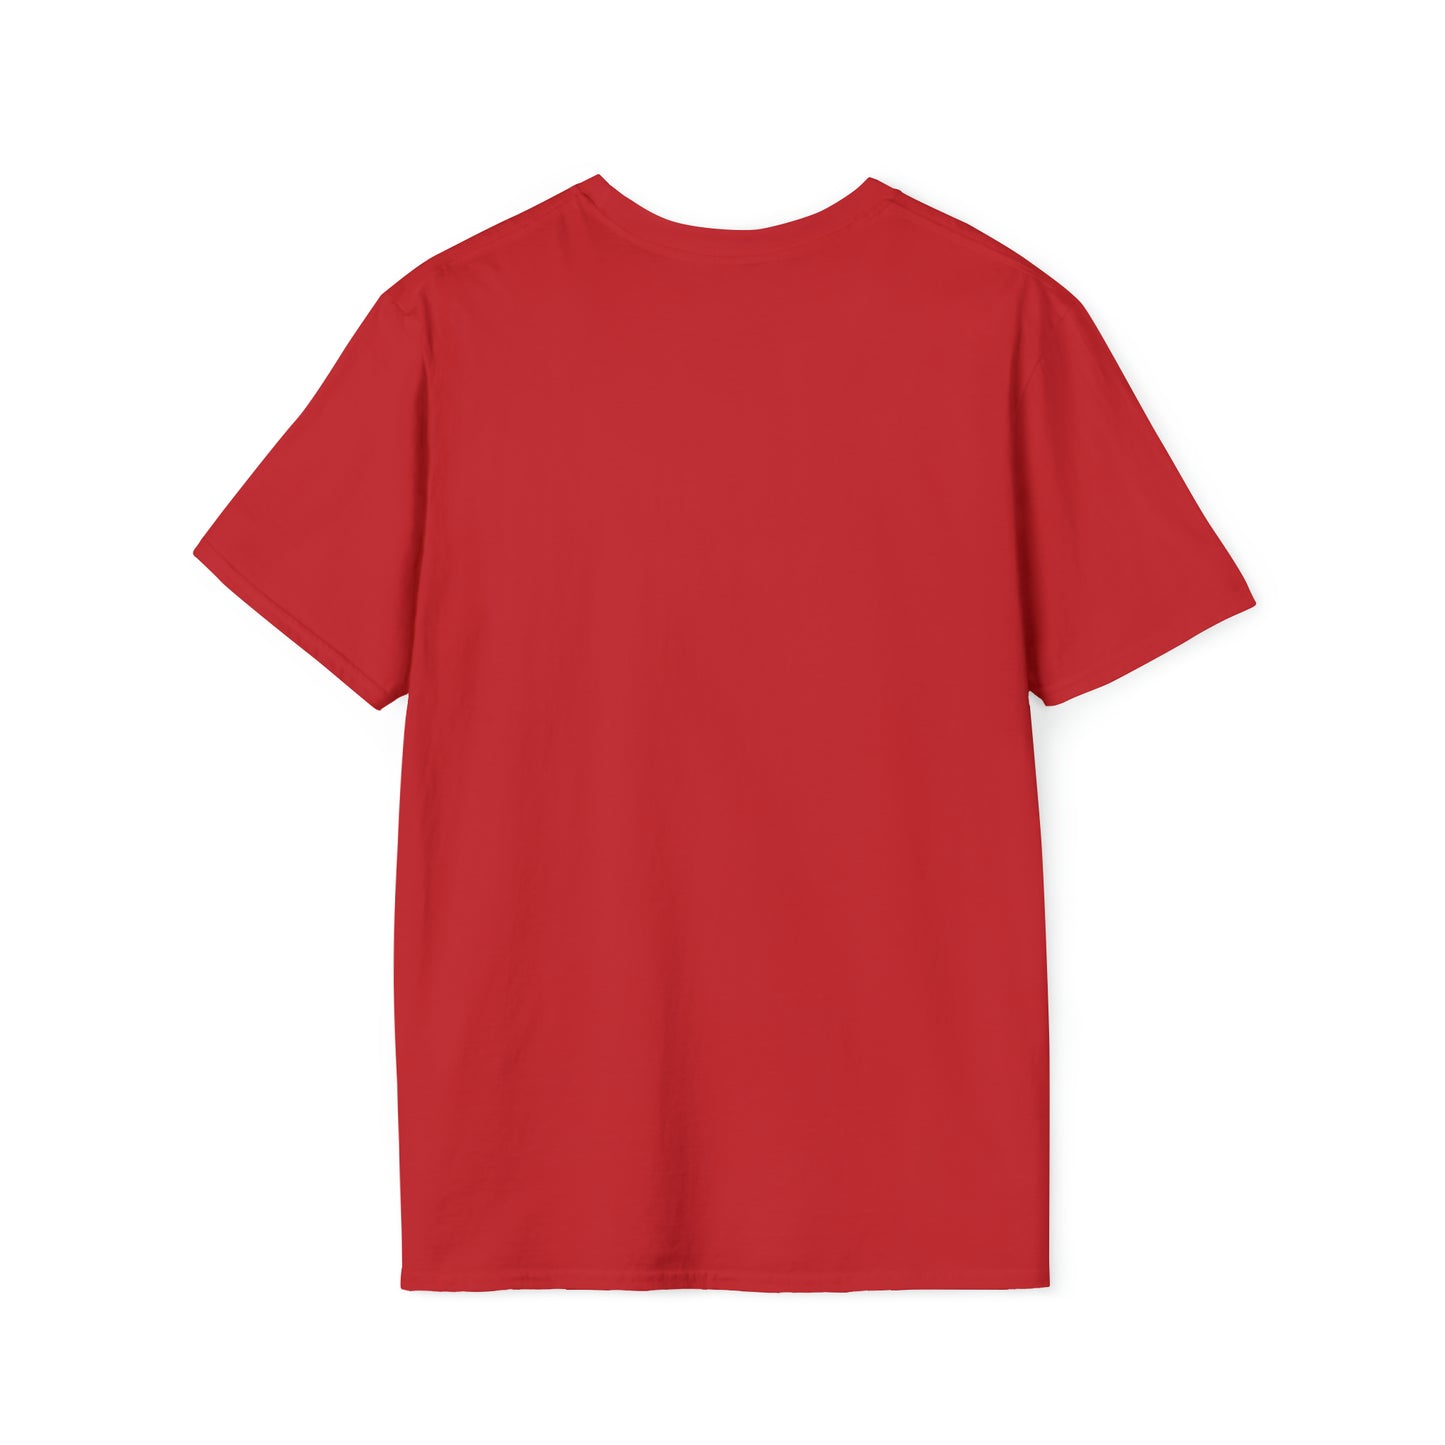 Messimporta Unisex Softstyle T-Shirt